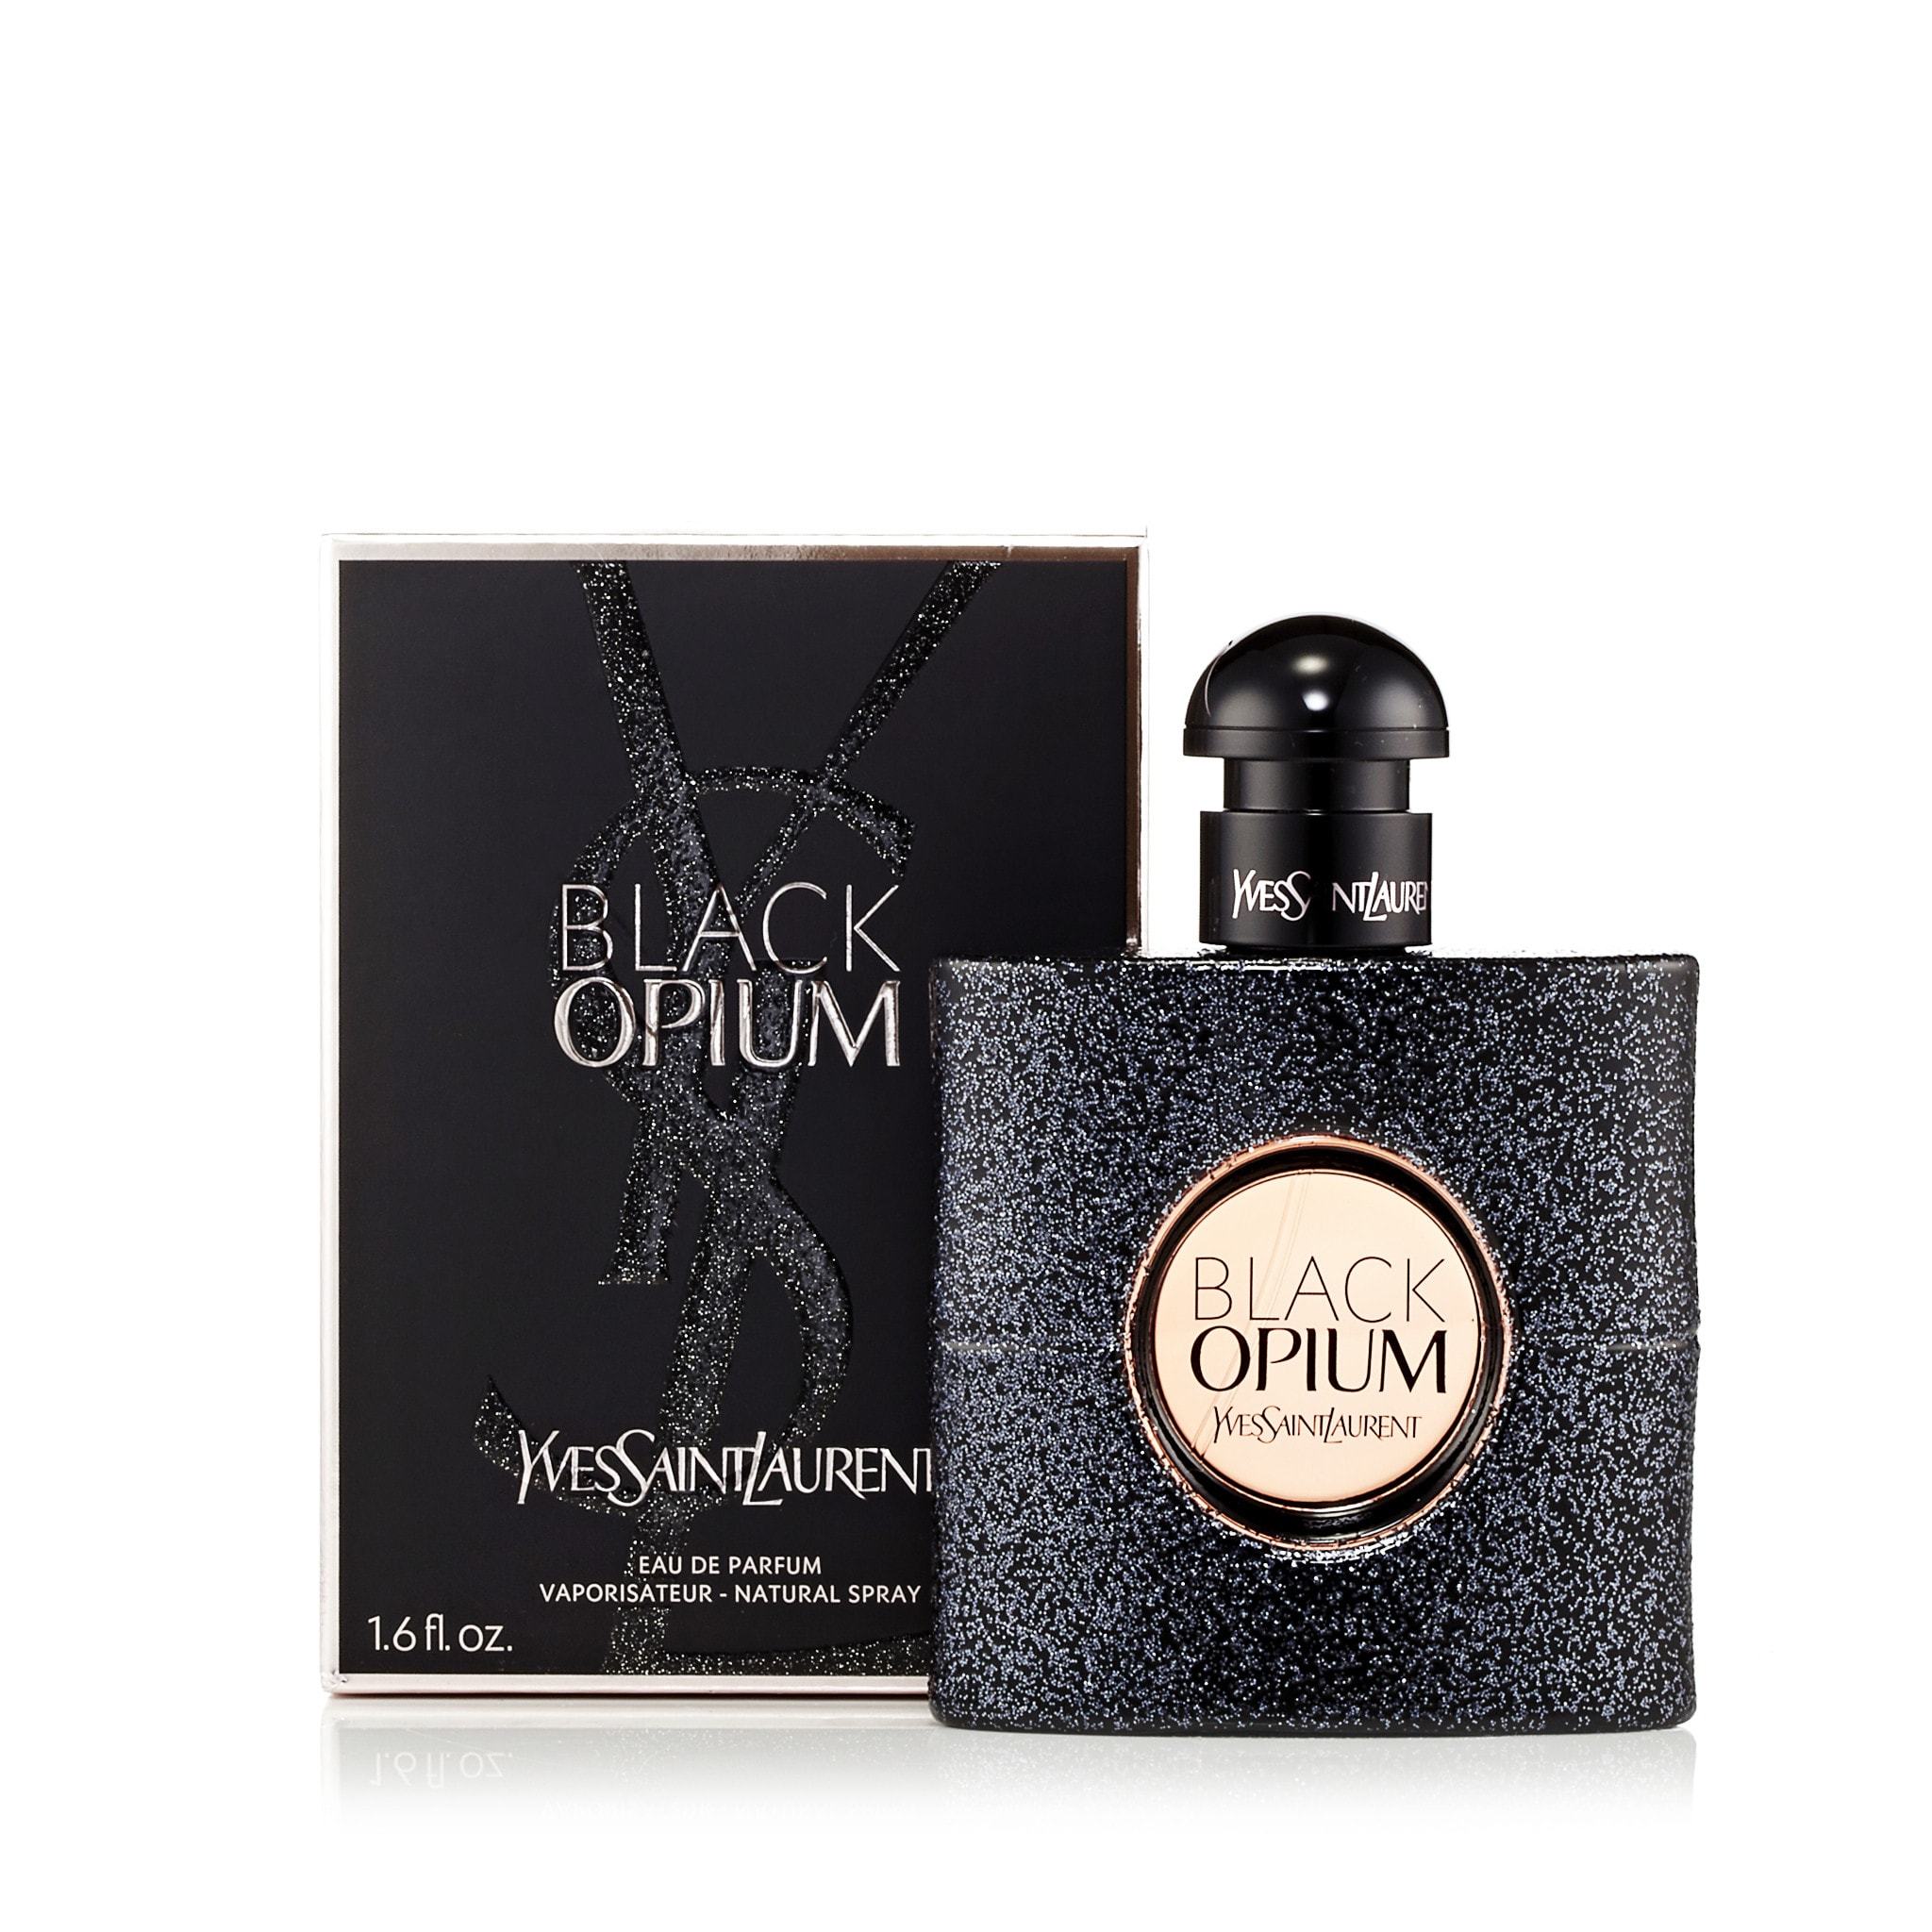 Opium - Yves Saint Laurent